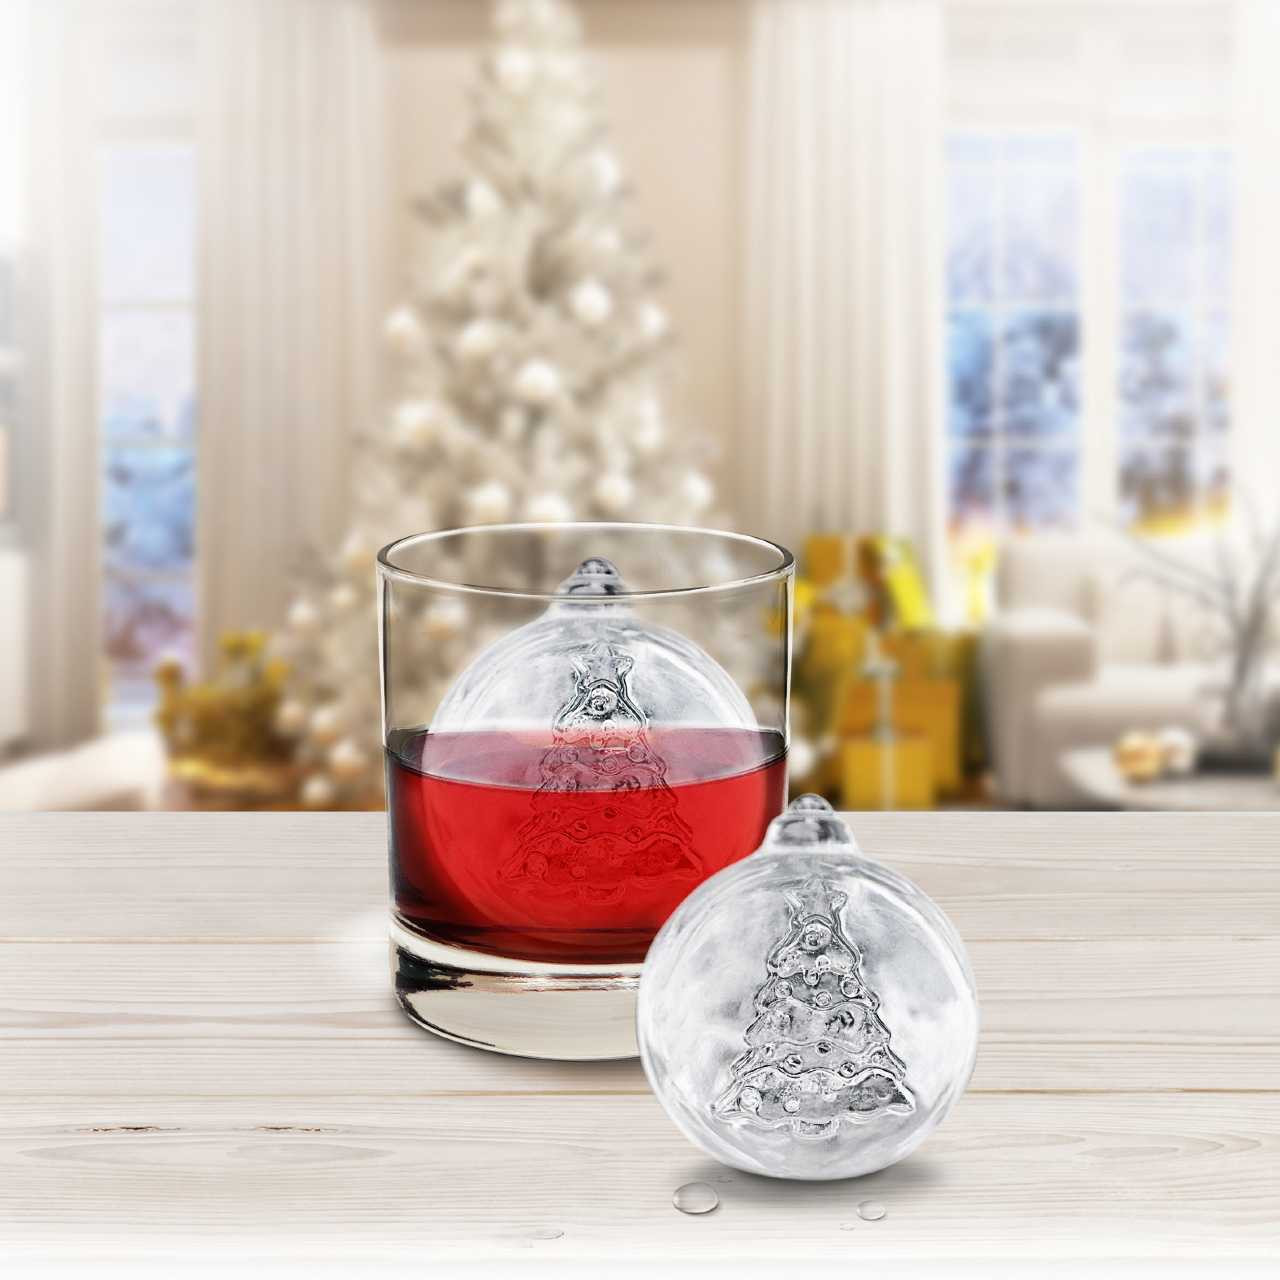 Naughty & Ice Christmas Tree Ice Mold